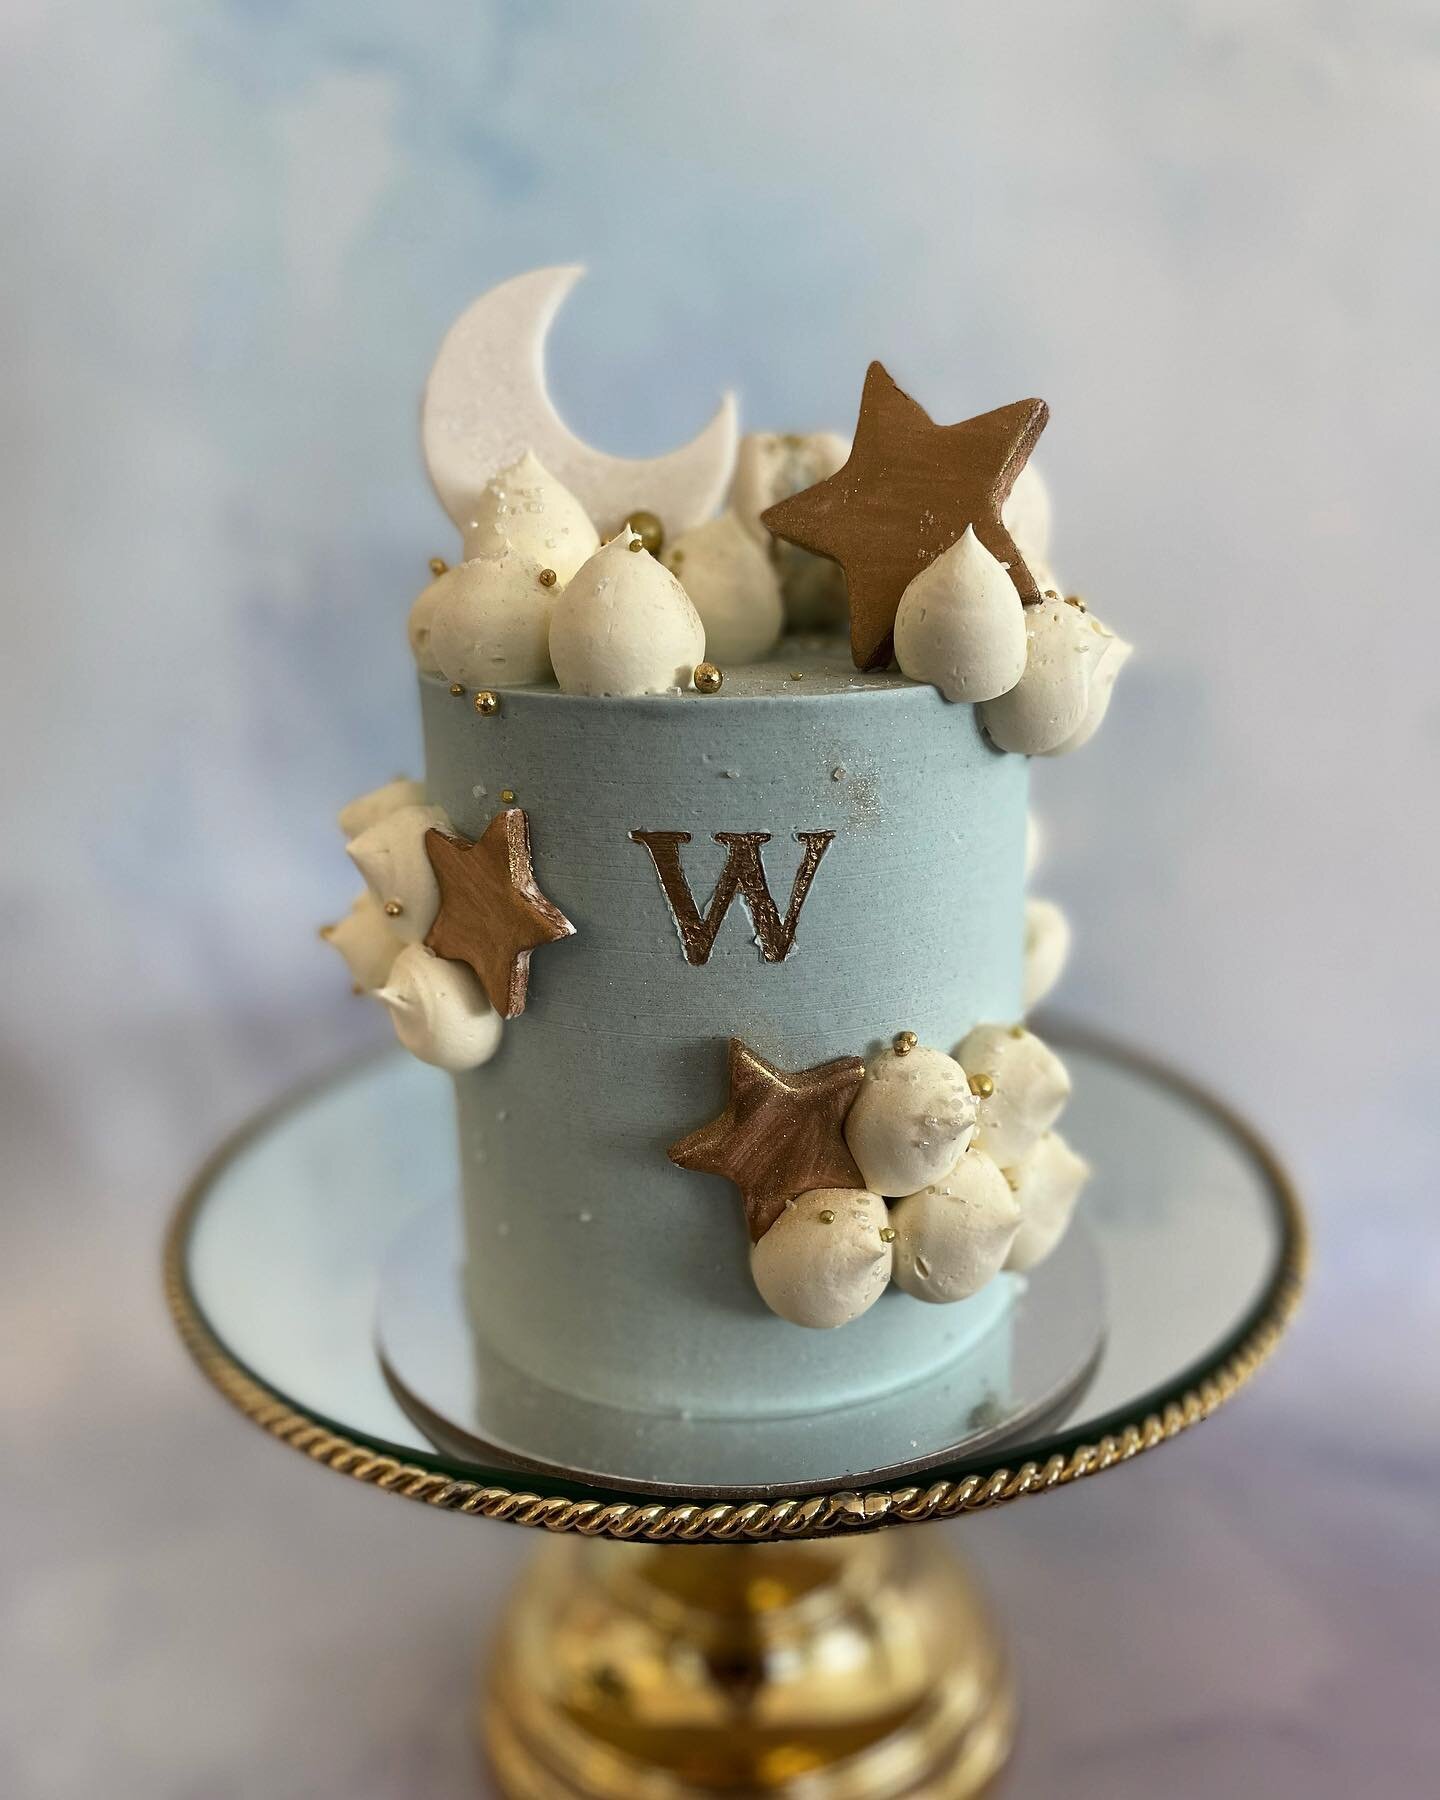 The sweetest baby blue Moon 🌙 &amp; Stars 🌟 Cake with monogram initial #poshlittlecakes #perthcake #perthcakes #cakesofperth #perthcakedesigner #cakesperth #perthbaker #acdnmember #wiltoncakes